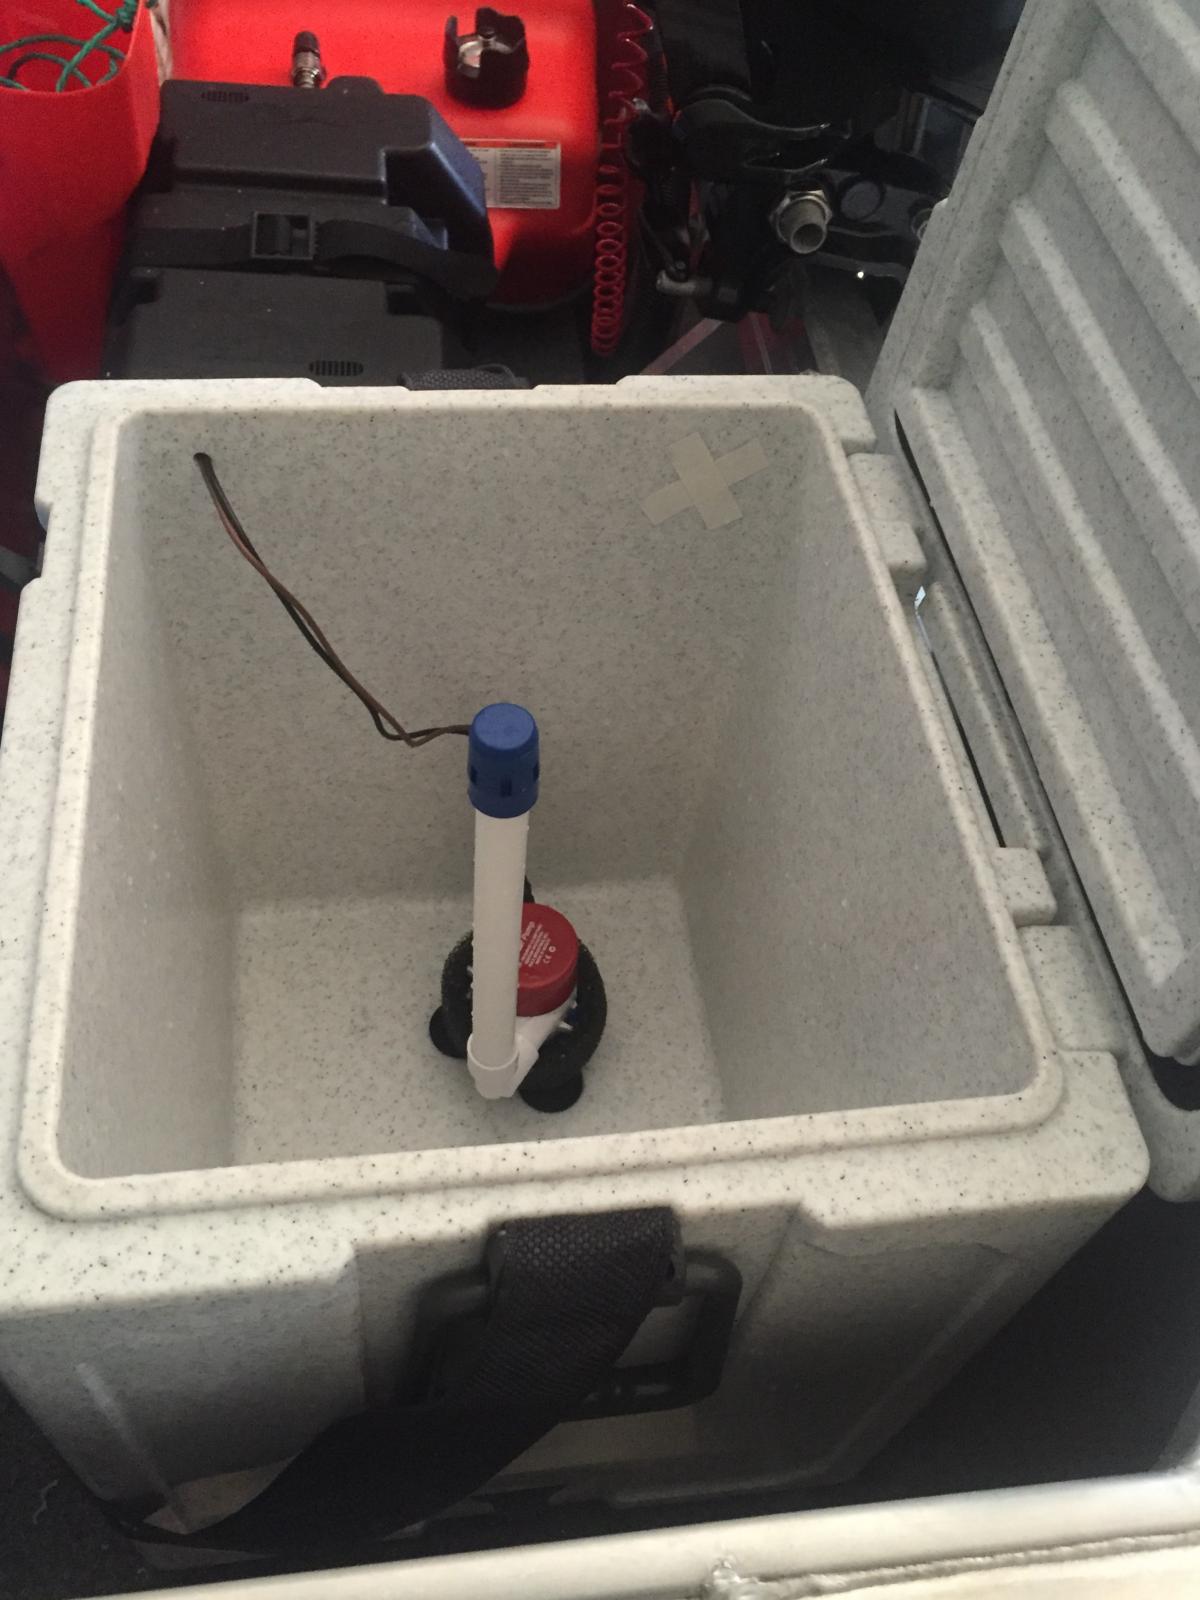 Esky live bait tank. Aerator to 12v battery - Boating - DECKEE Community